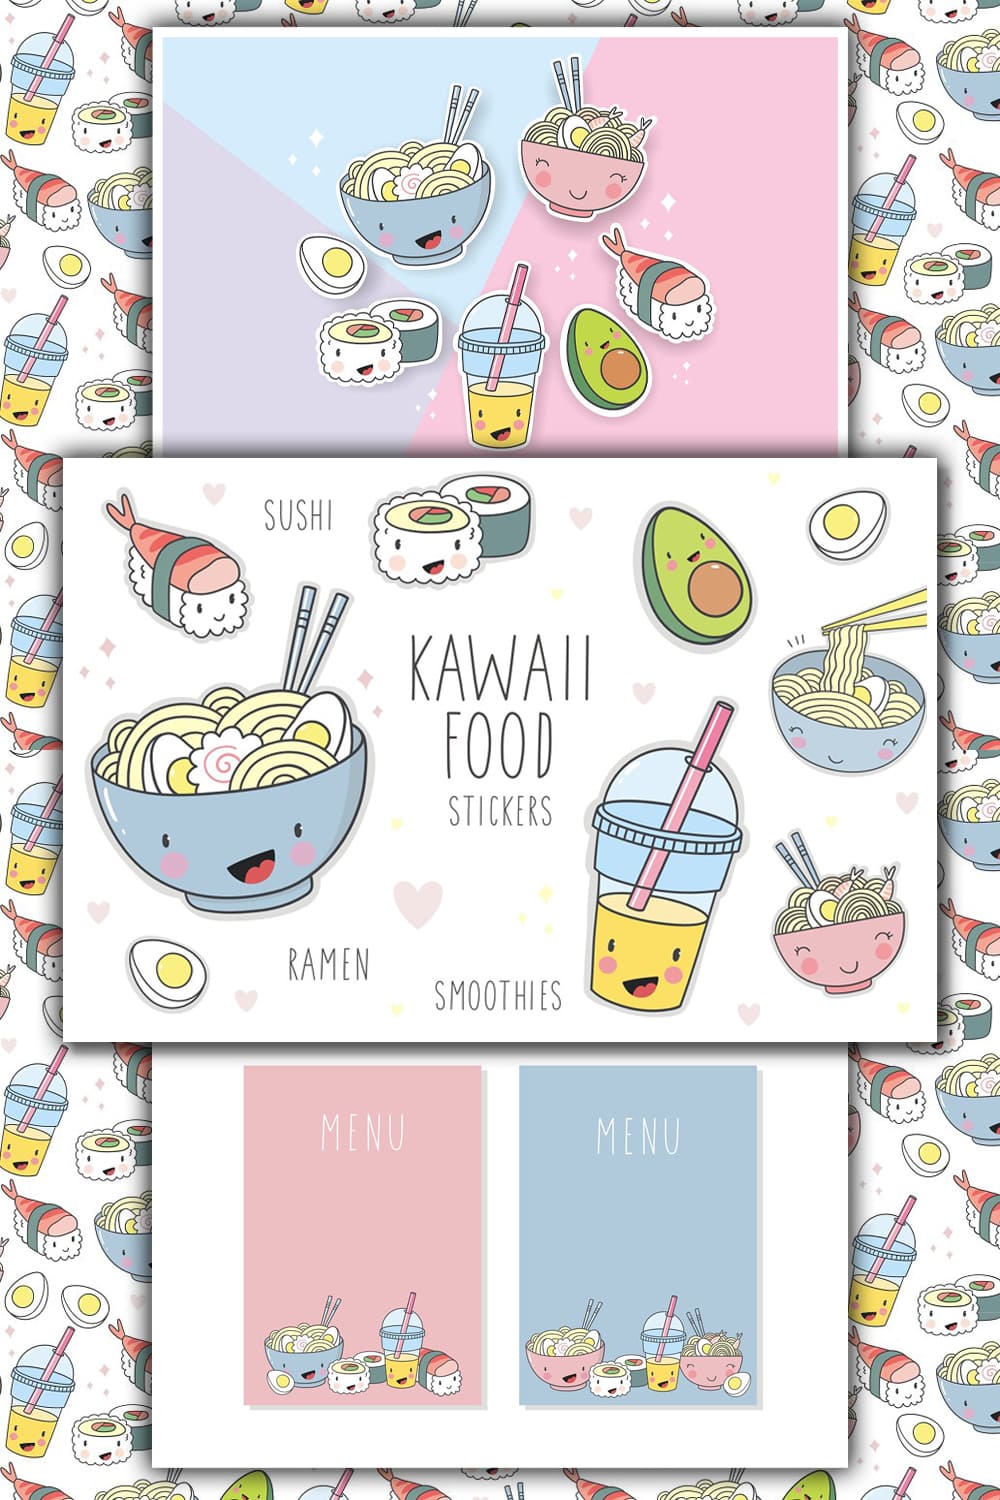 2465756 kawaii cartoon food stickers pinterest 1000 1500